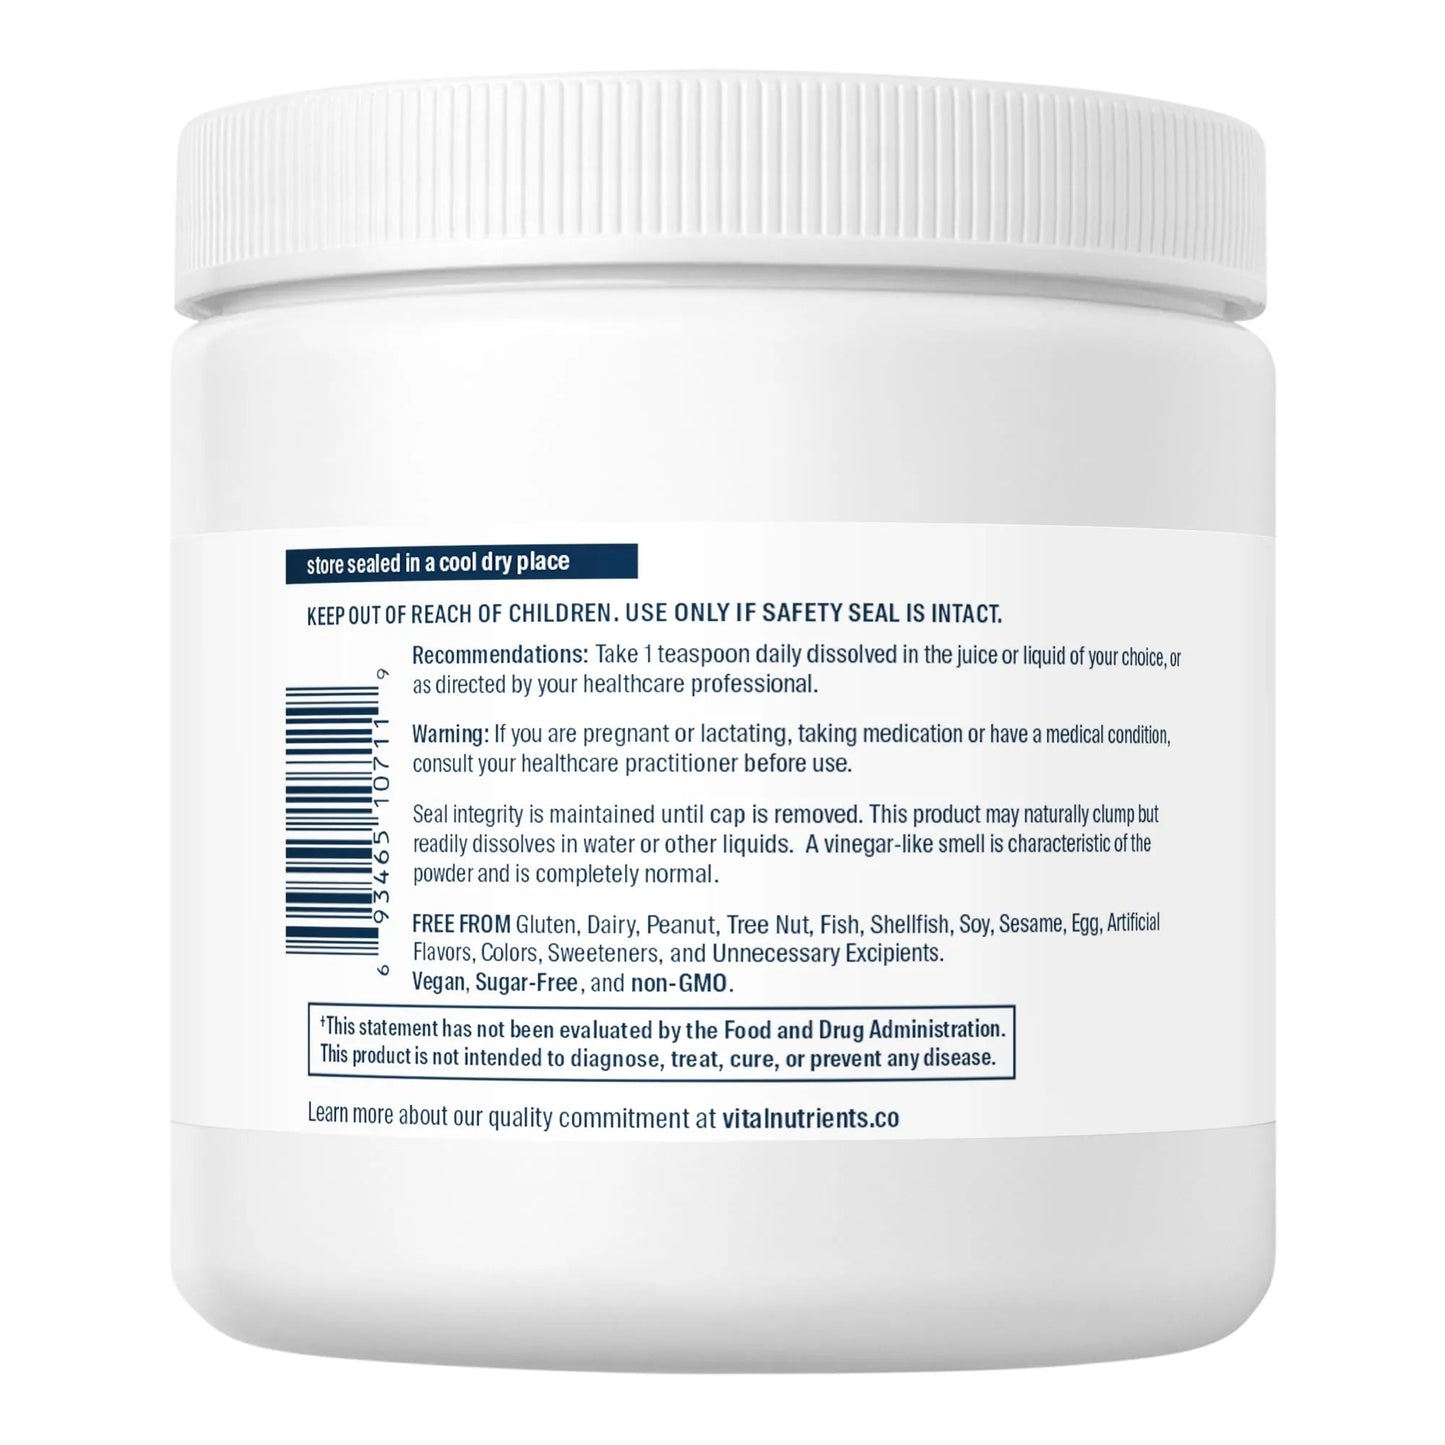 Acetyl L-Carnitine Powder(Vital Nutrition) - HAPIVERI